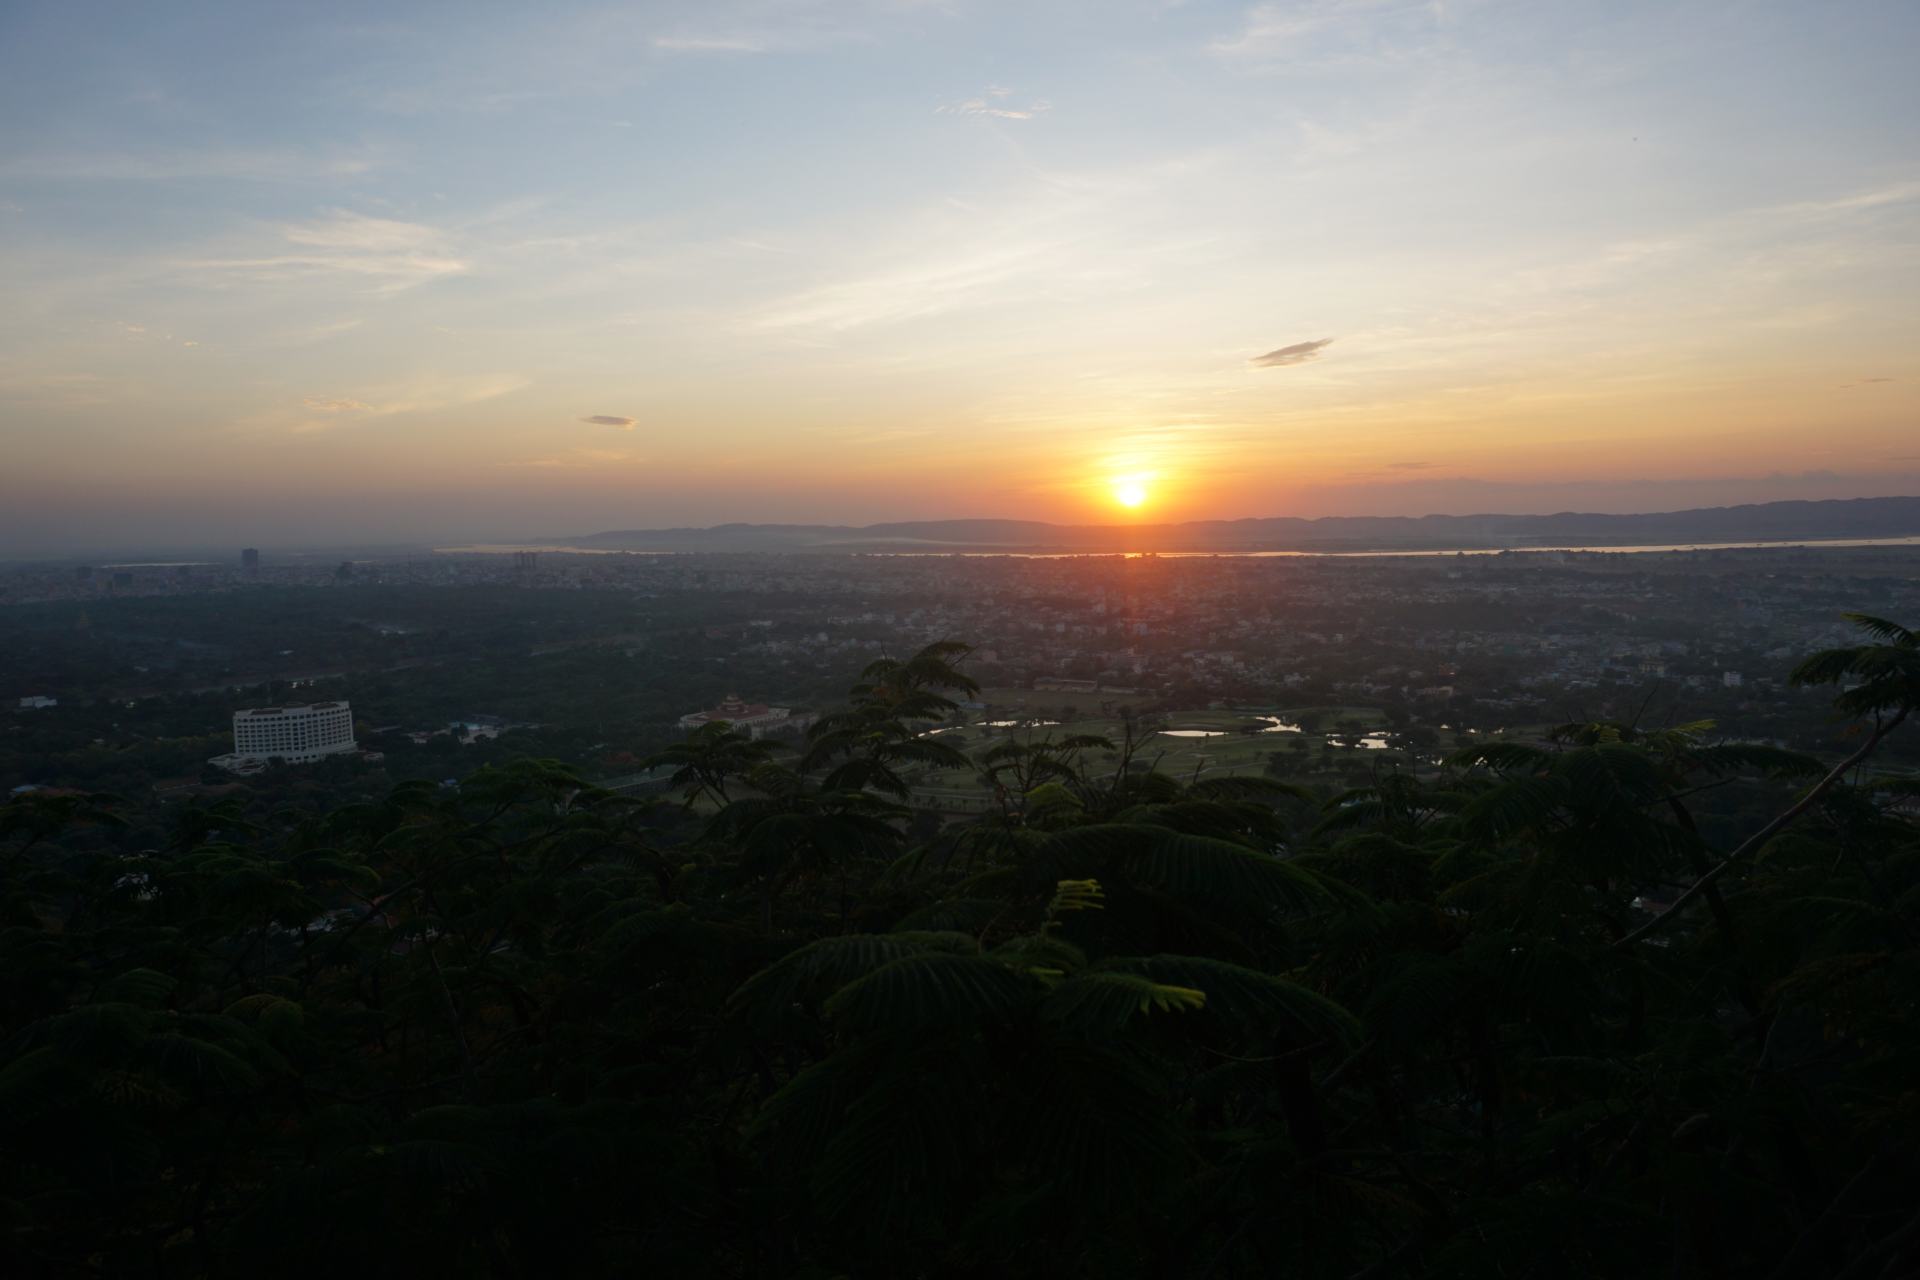 ;andalayHill Sonnenuntergang in Myanmar